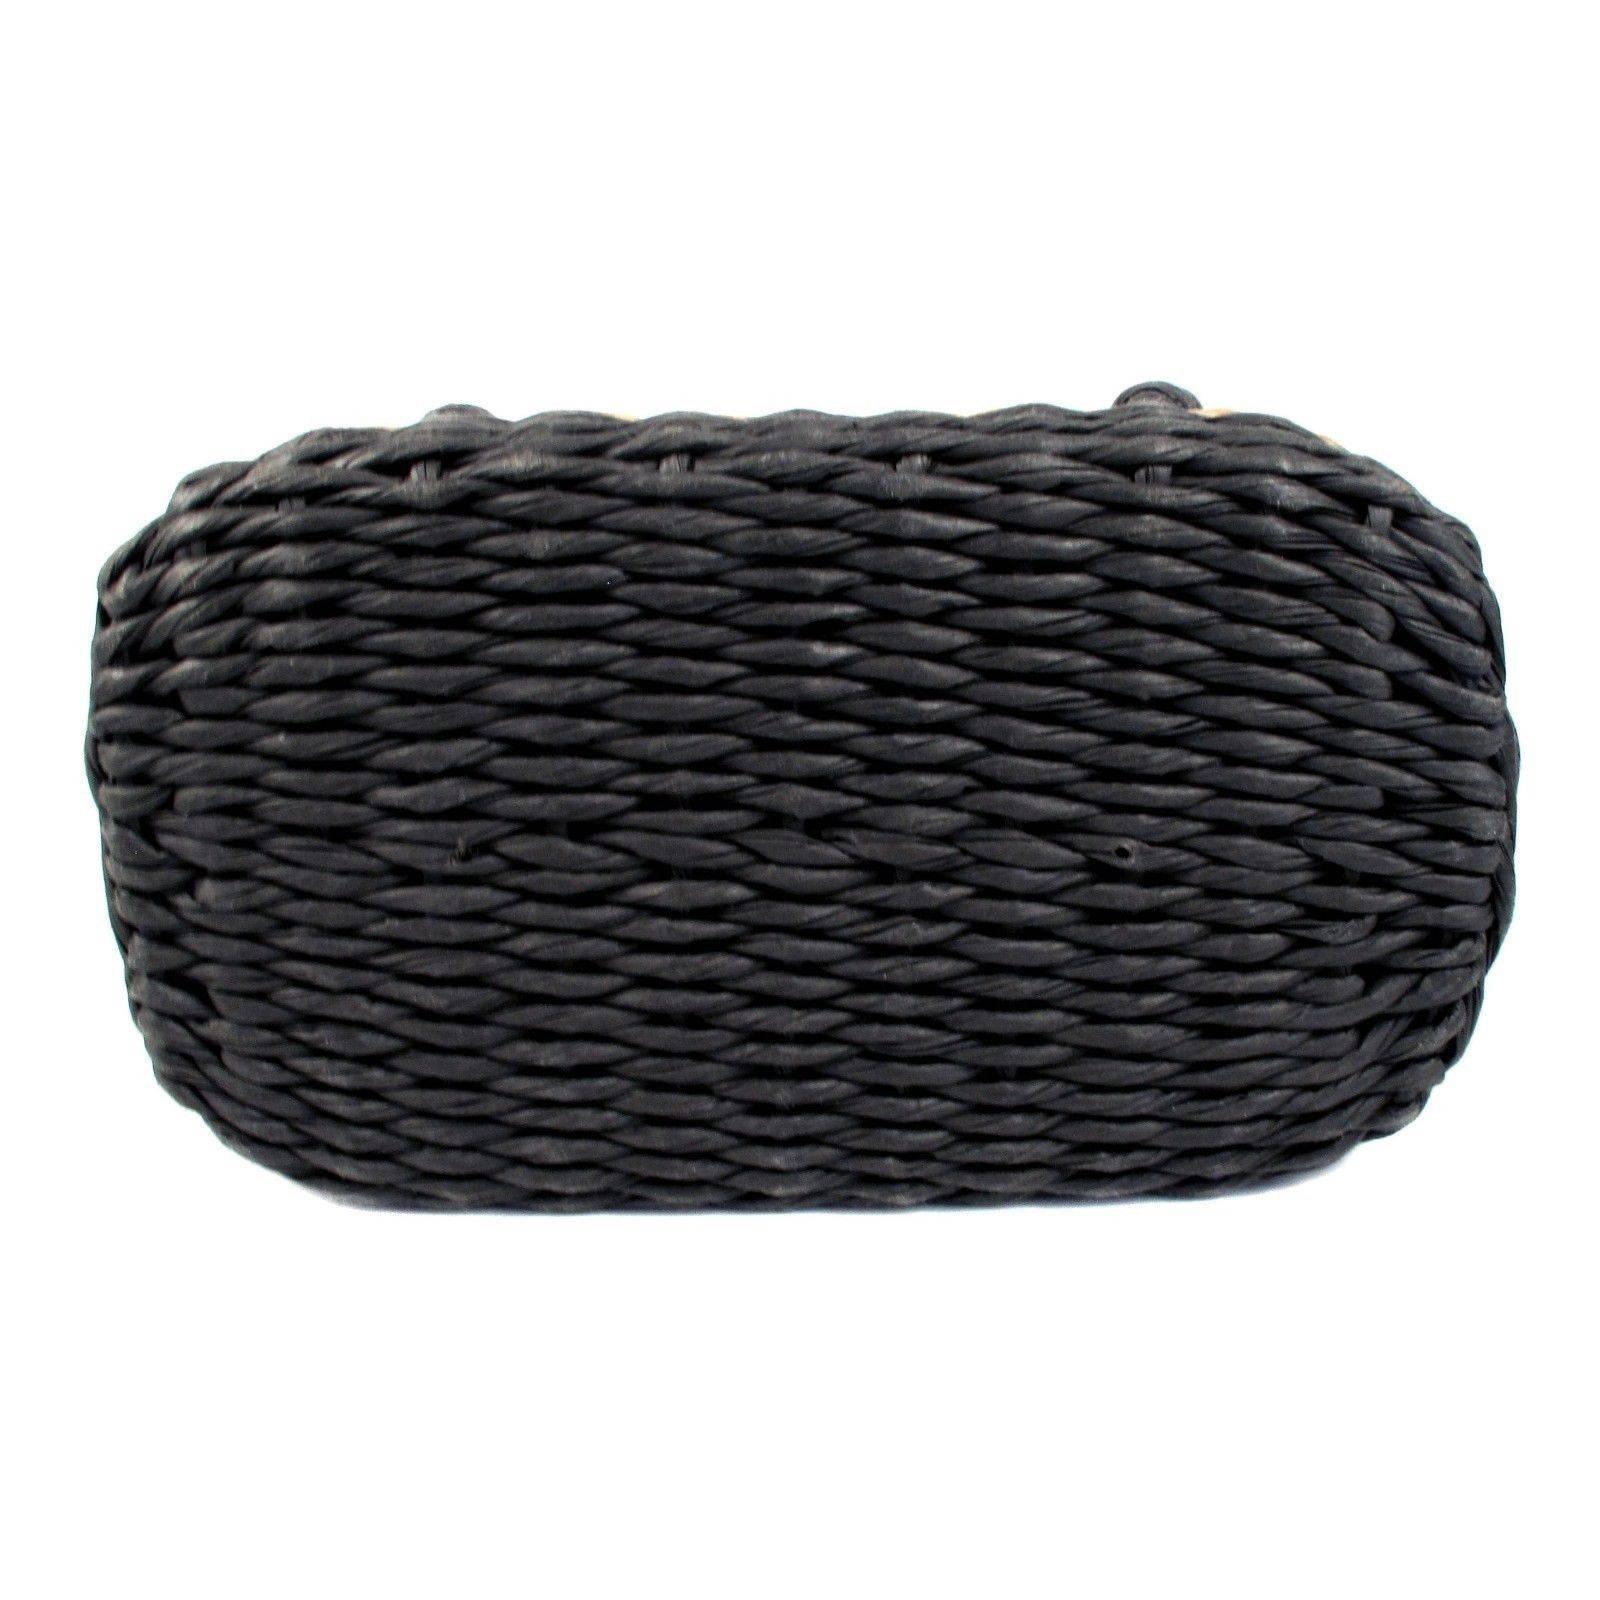 Chanel Straw Bag - Rare Basket Woven Raffia Tote Bag Gray Tan Black Leather CC 1